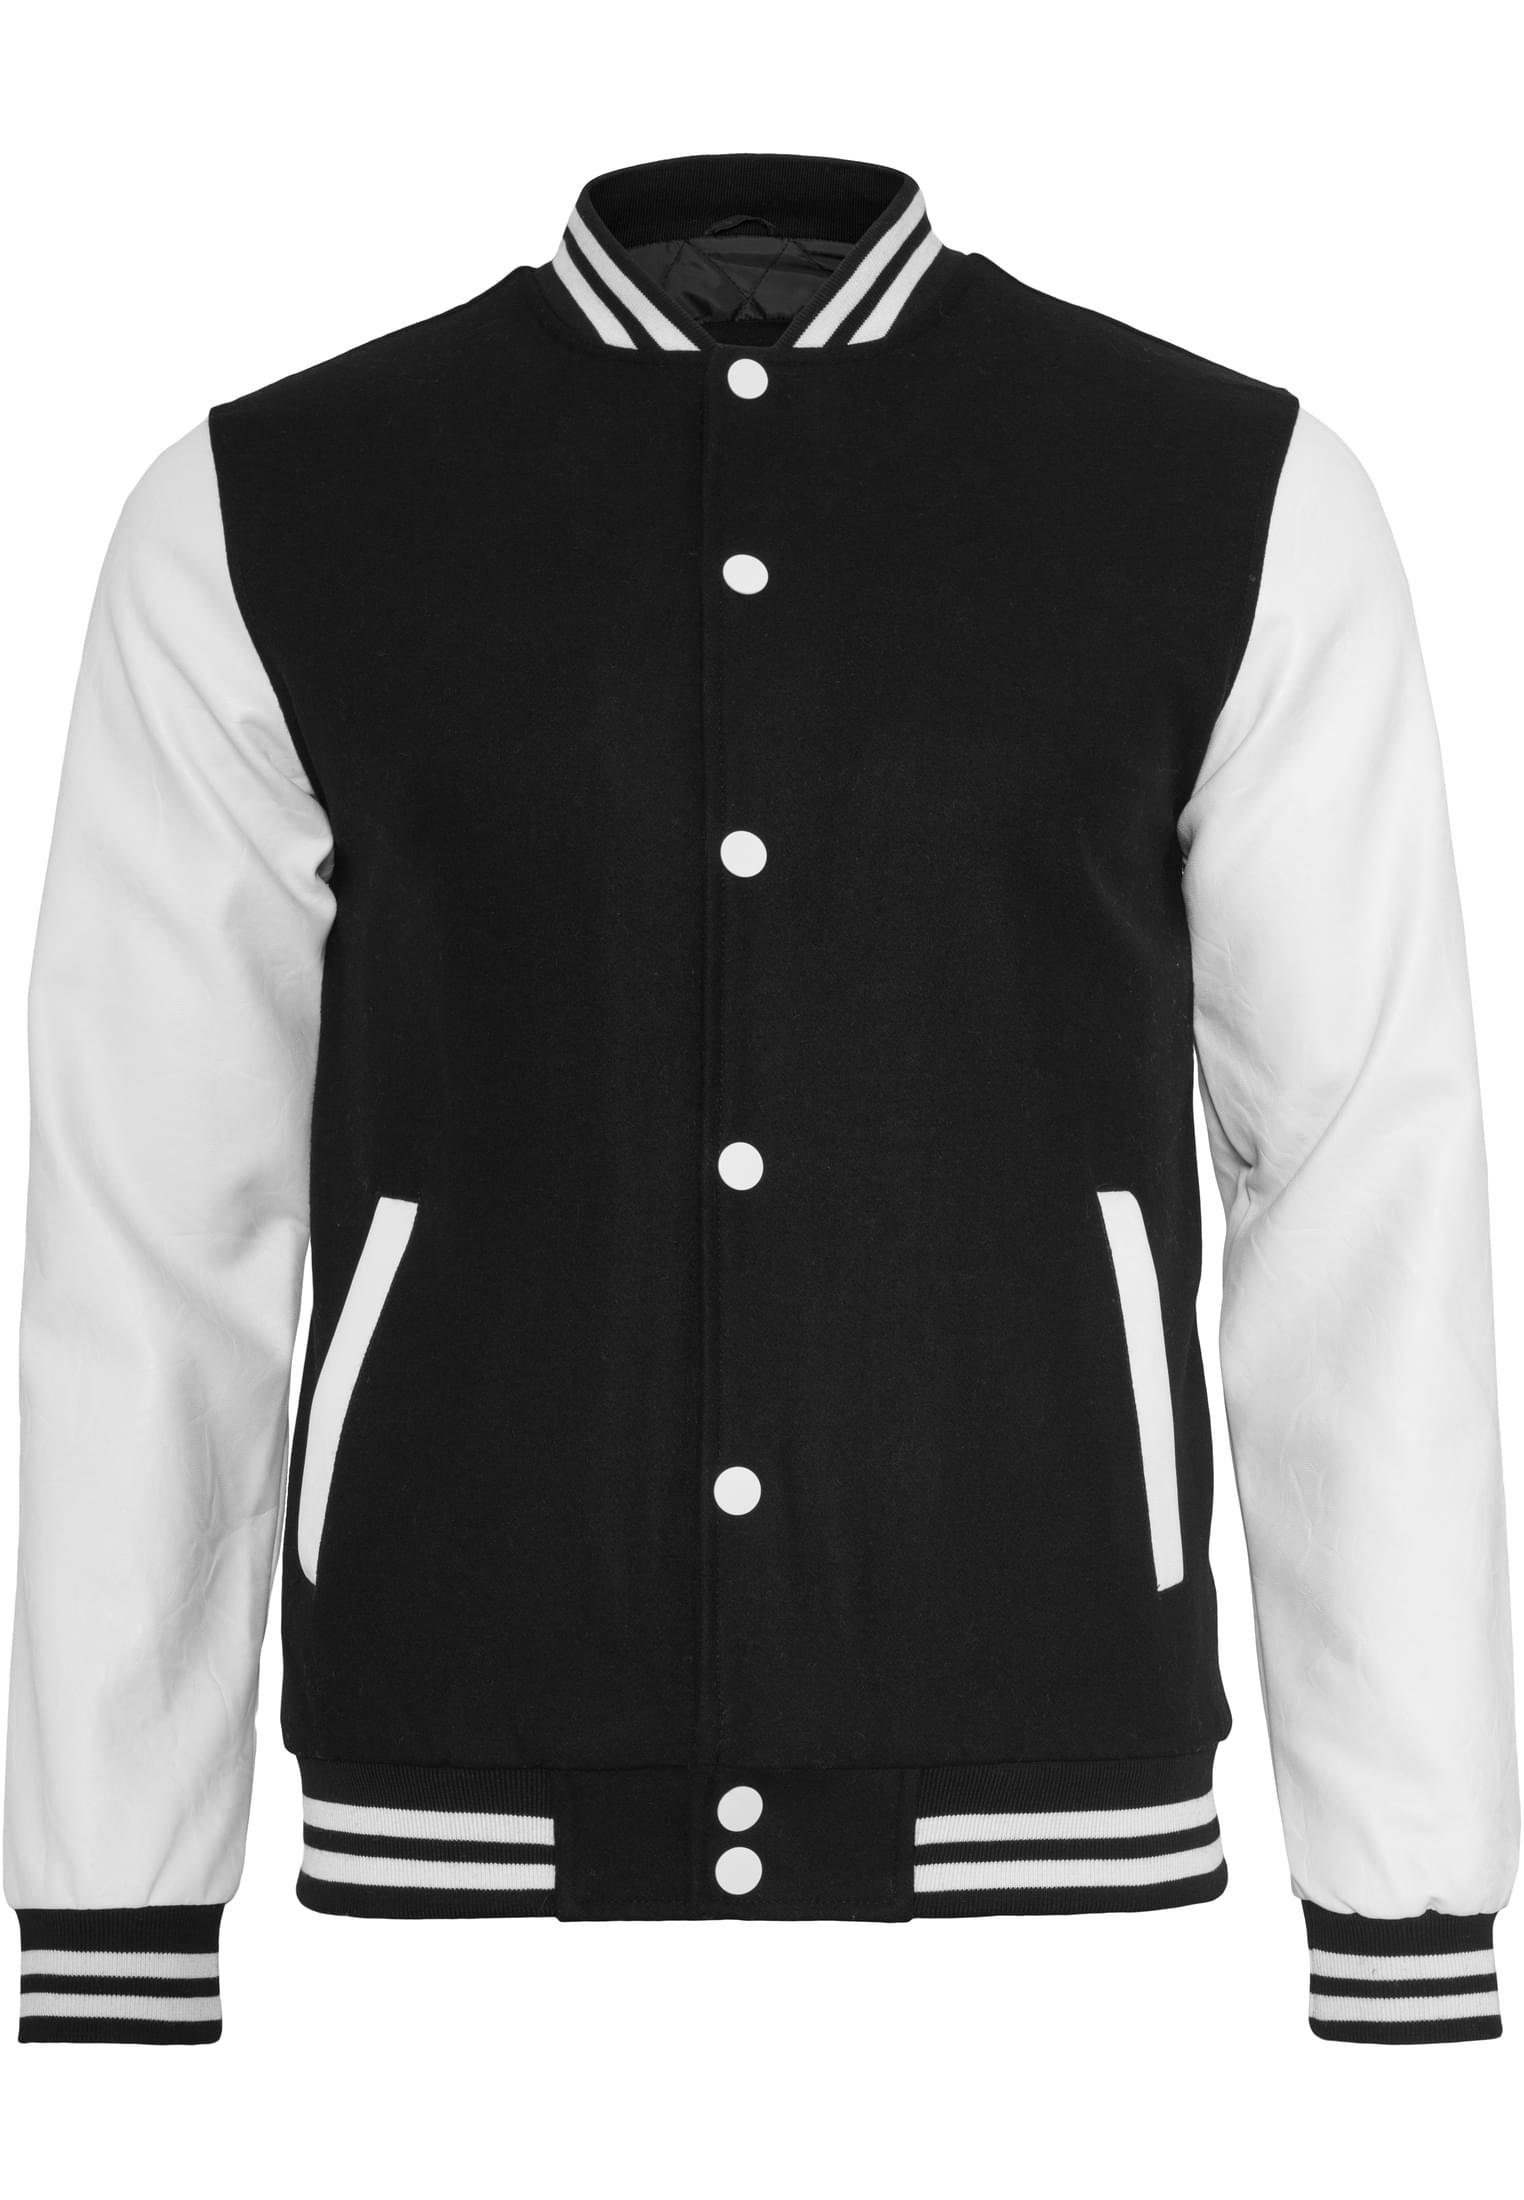 URBAN CLASSICS Outdoorjacke Herren Jacket (1-St) College Oldschool black/white